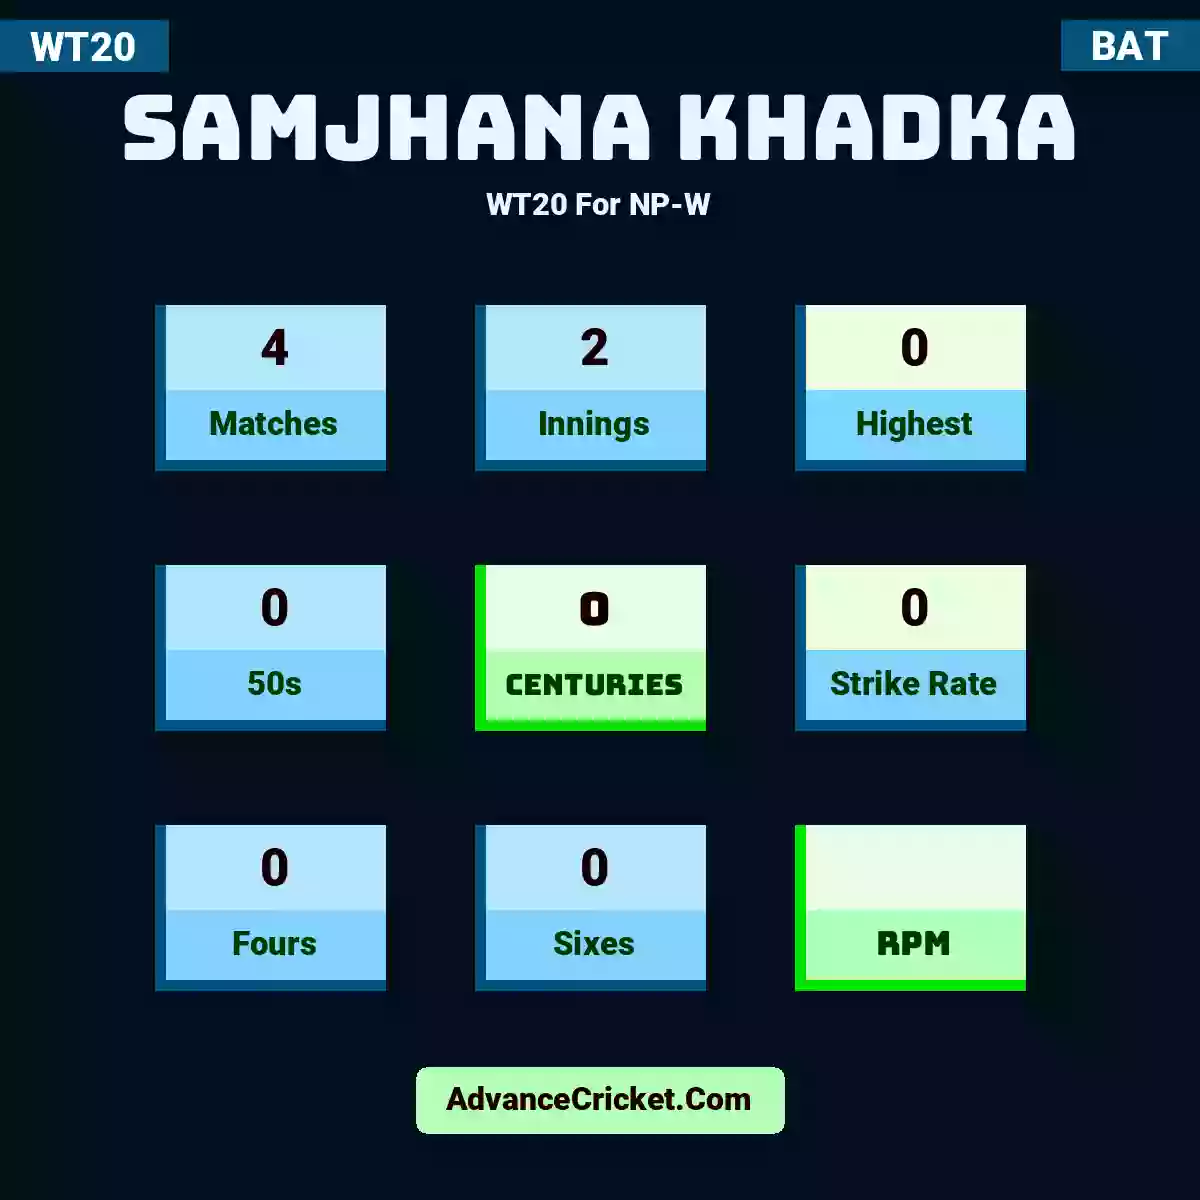 Samjhana Khadka WT20  For NP-W, Samjhana Khadka played 4 matches, scored 0 runs as highest, 0 half-centuries, and 0 centuries, with a strike rate of 0. S.Khadka hit 0 fours and 0 sixes.